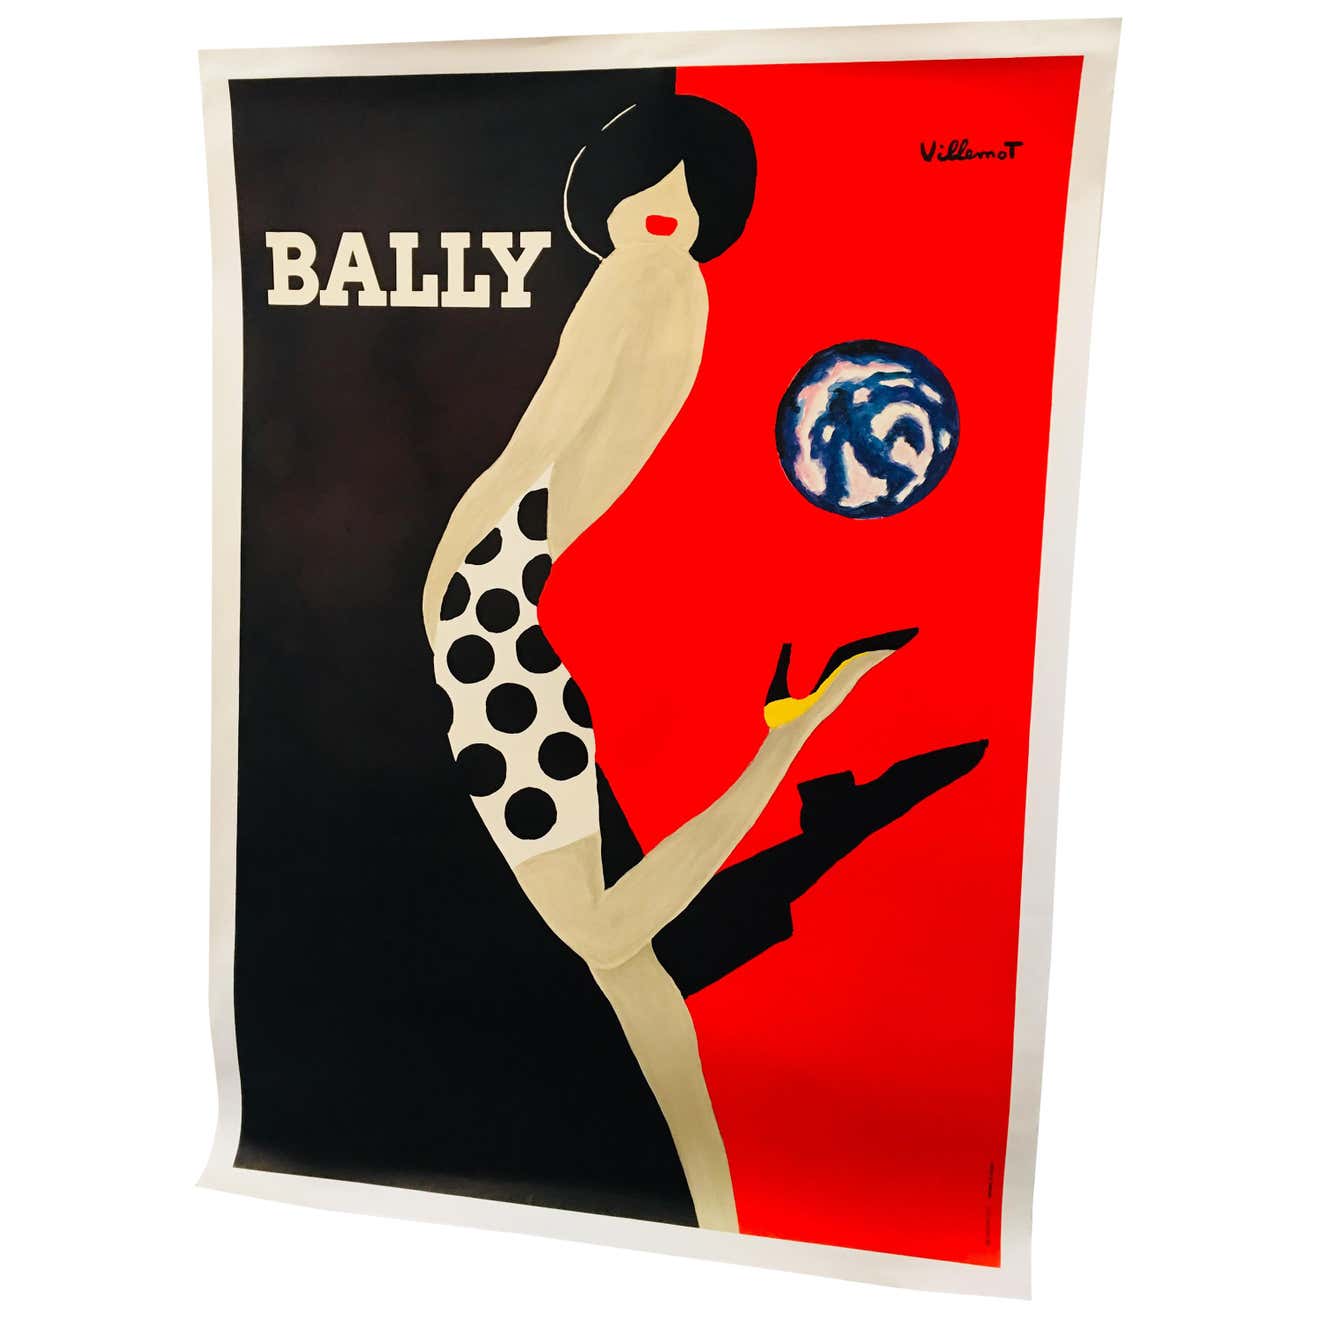 Original Vintage French Bally Shoe Poster, 'Bally Kick' by Bernard ...